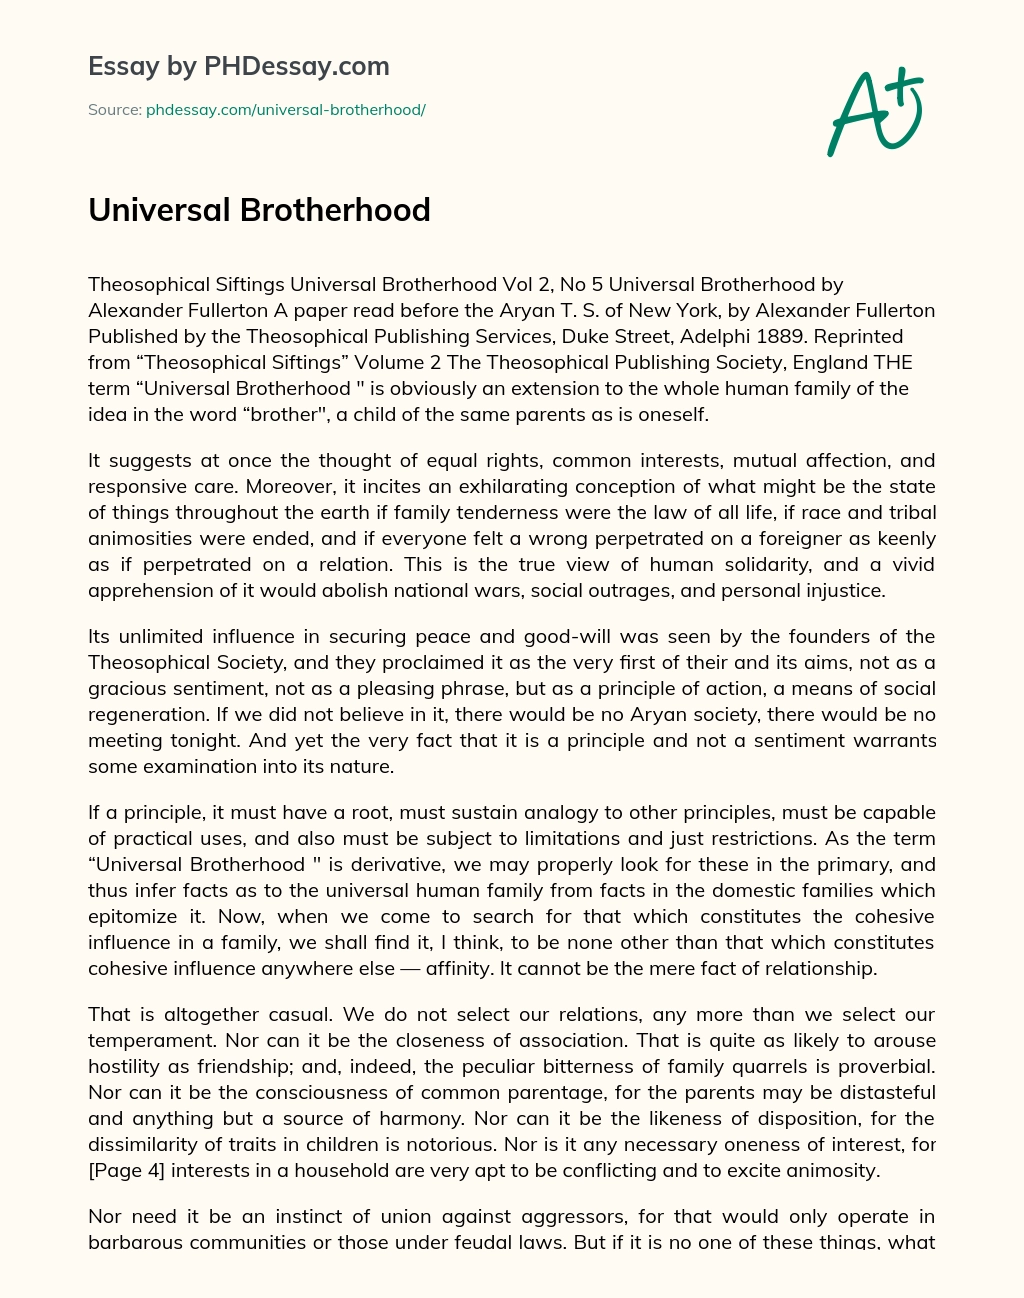 Universal Brotherhood essay